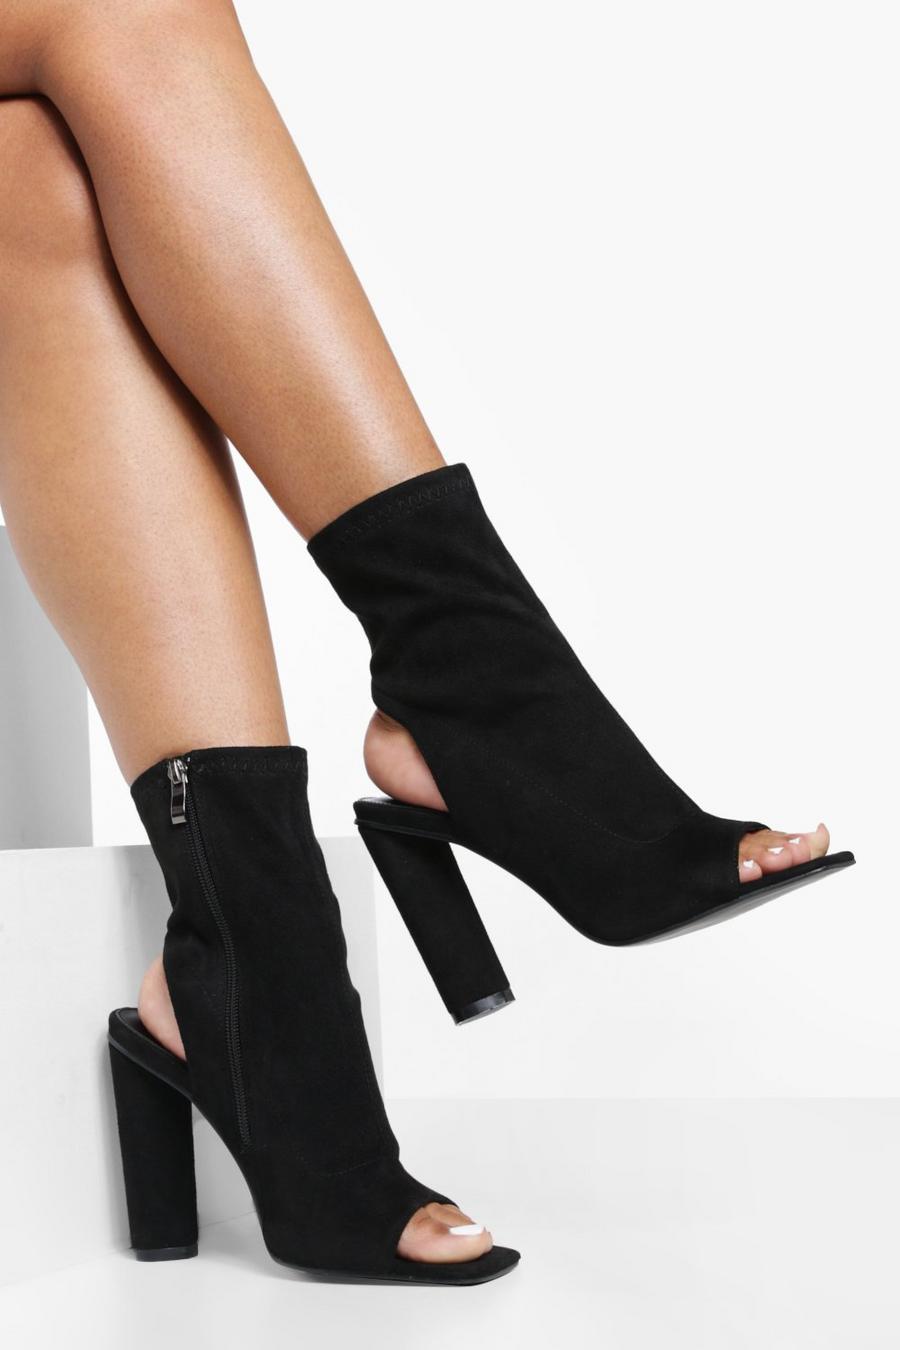 https://media.boohoo.com/i/boohoo/fzz23540_black_xl/female-black-peep-toe-sock-boots/?w=900&qlt=default&fmt.jp2.qlt=70&fmt=auto&sm=fit